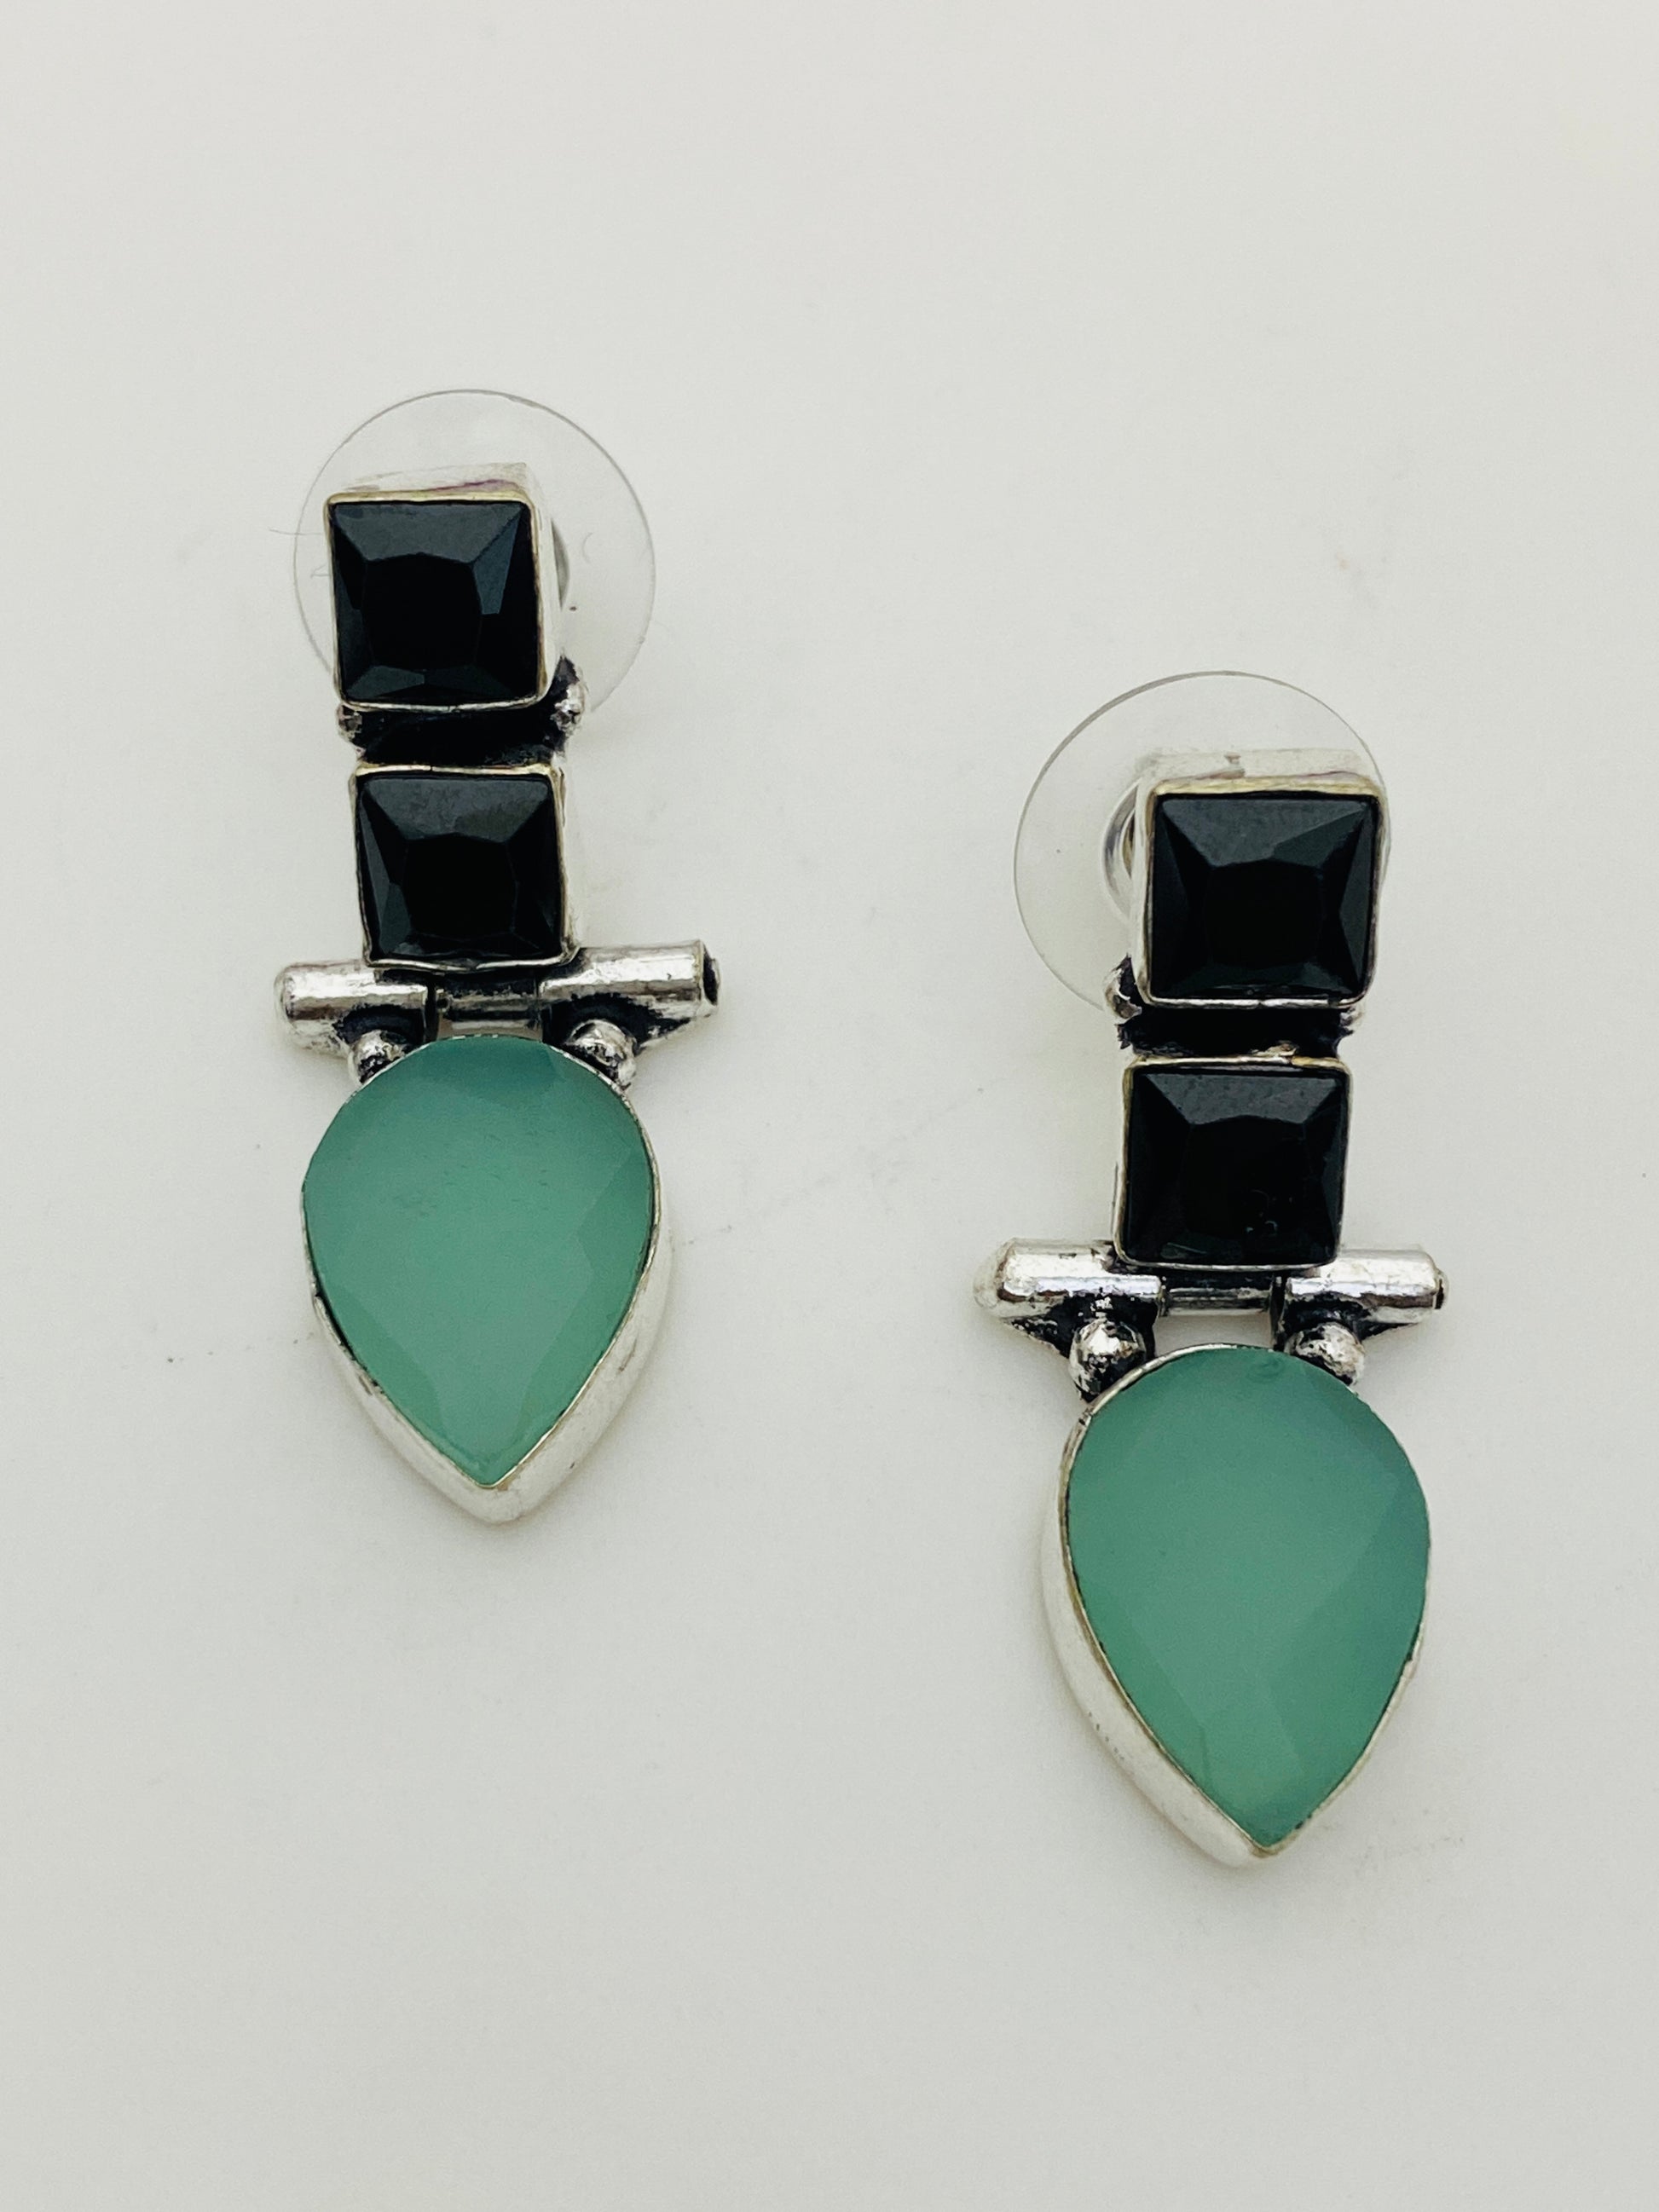 Appealing Light Blue Designer Silver Oxidized Earrings For women In USA